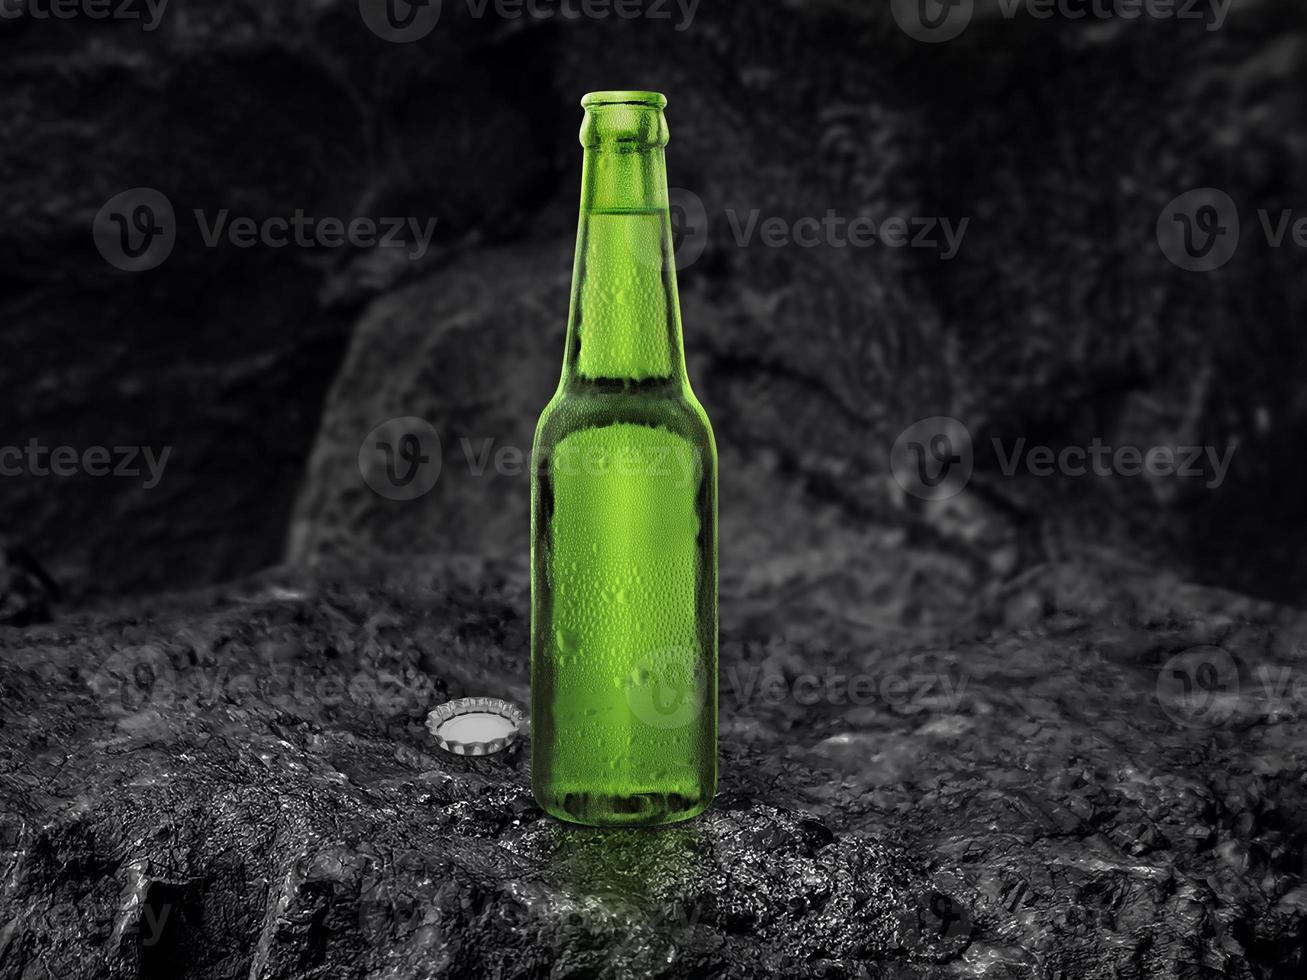 groene bierfles met druppelaar op zwarte steenkoolachtergrond foto